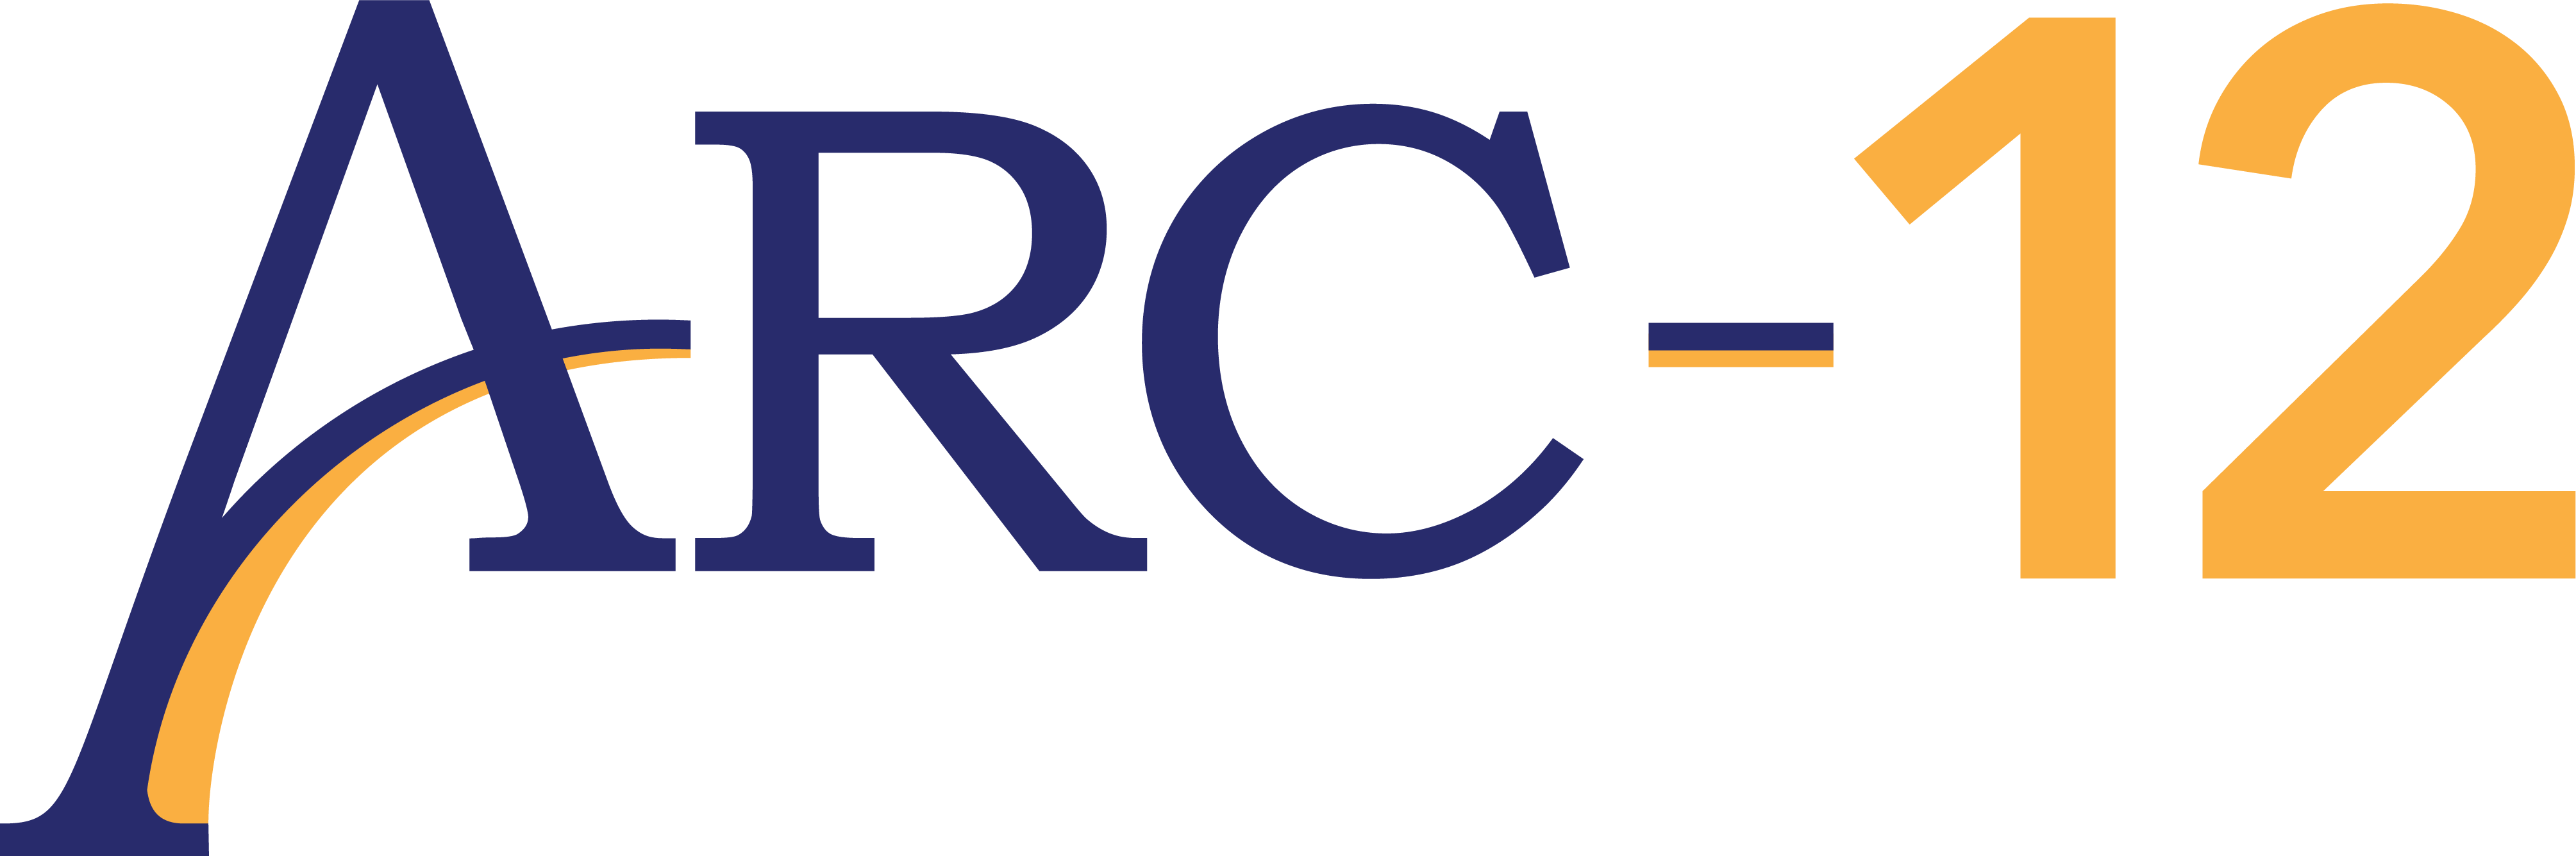 ARC-12 study logo